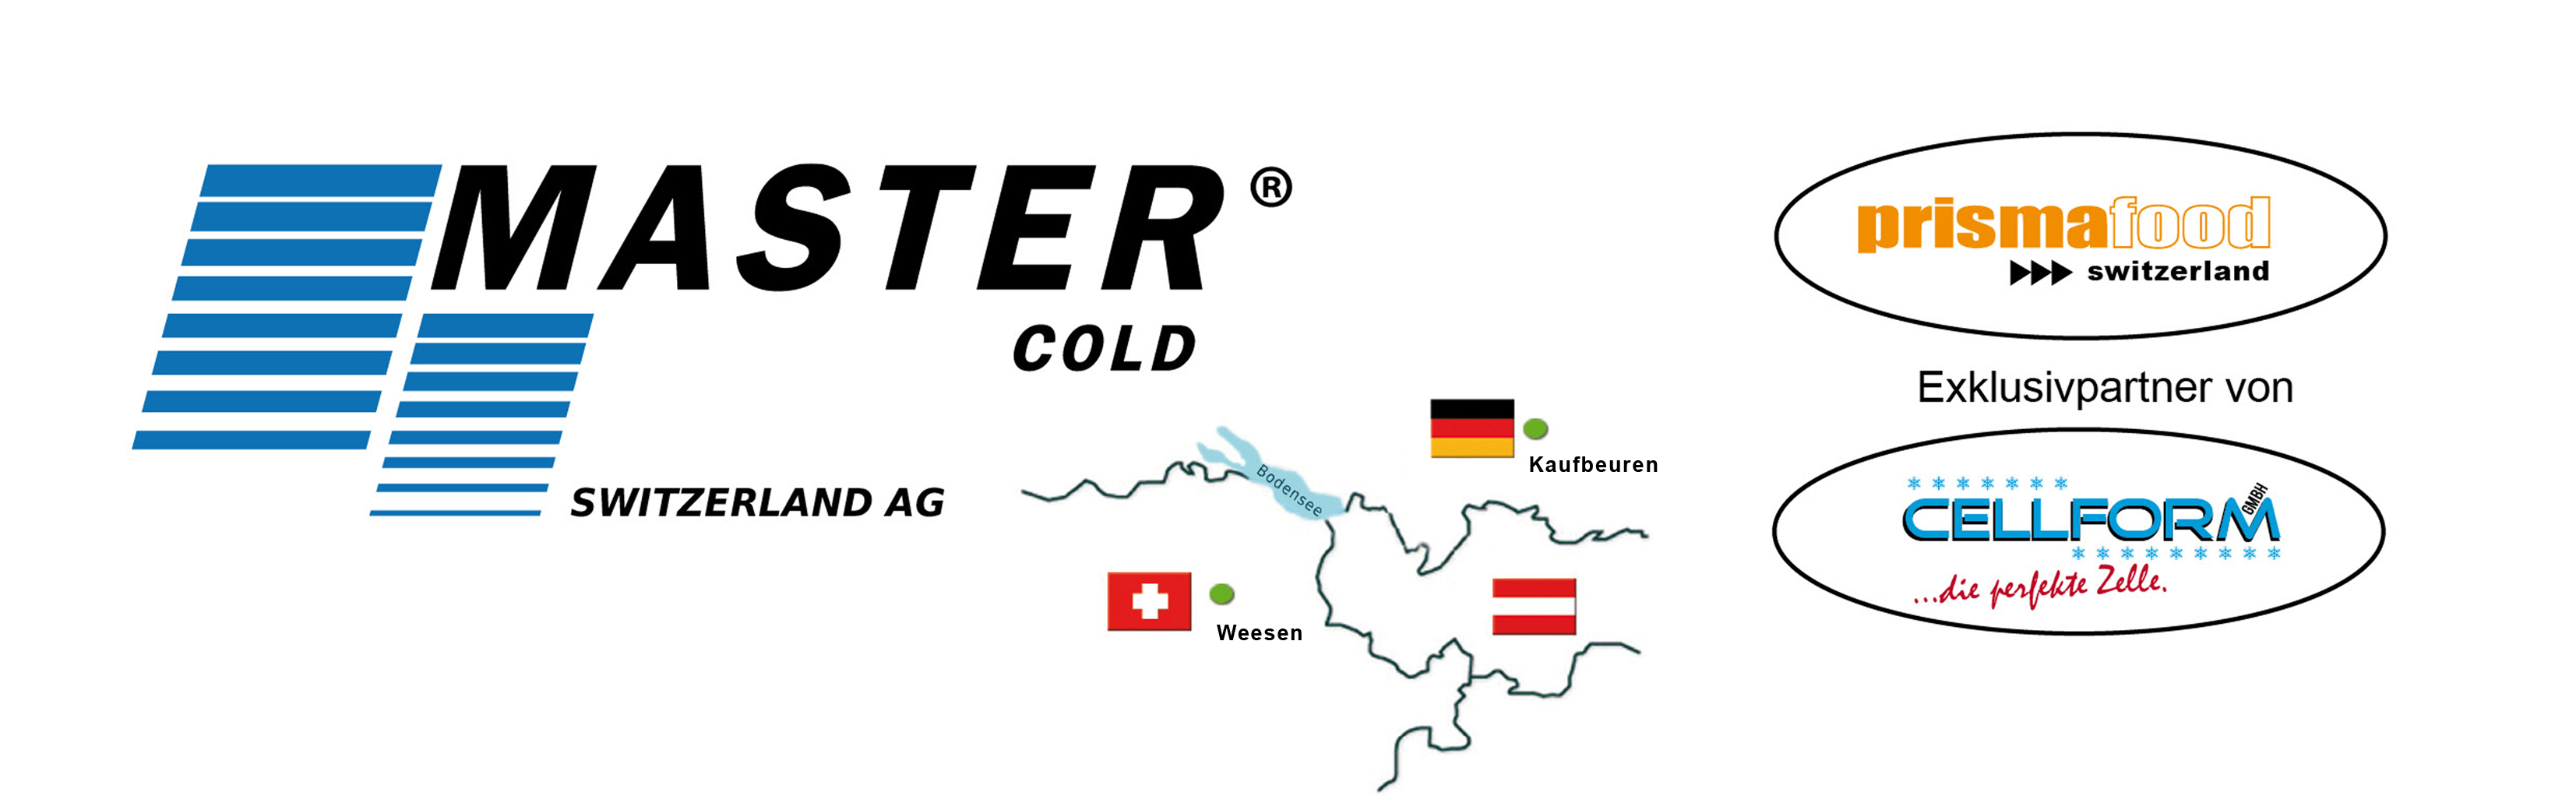 Master Cold Switzerland AG